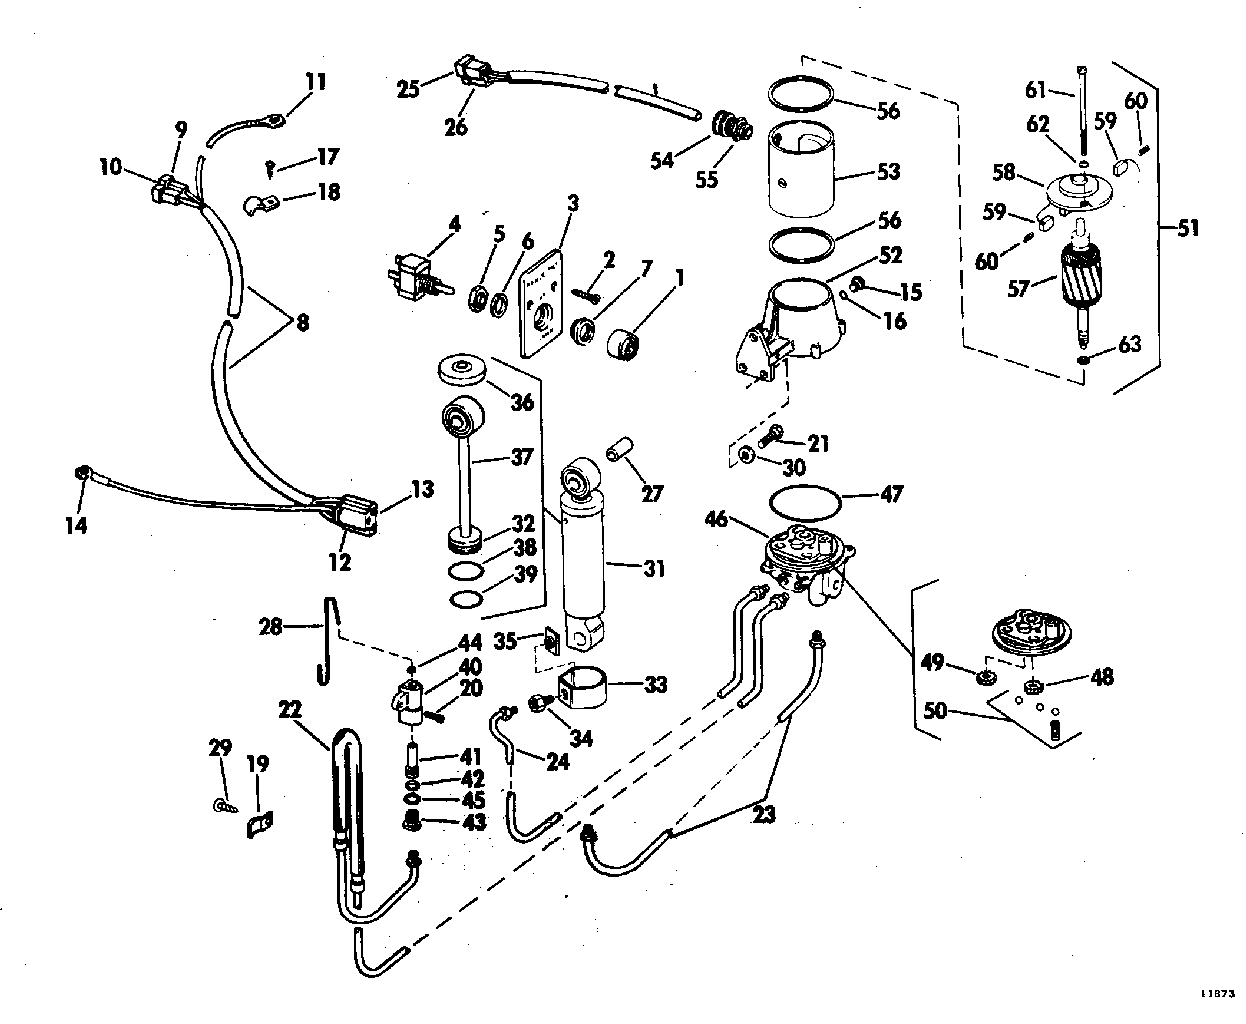 Evinrude 110 Wiring Diagram - Wiring Diagram & Schemas